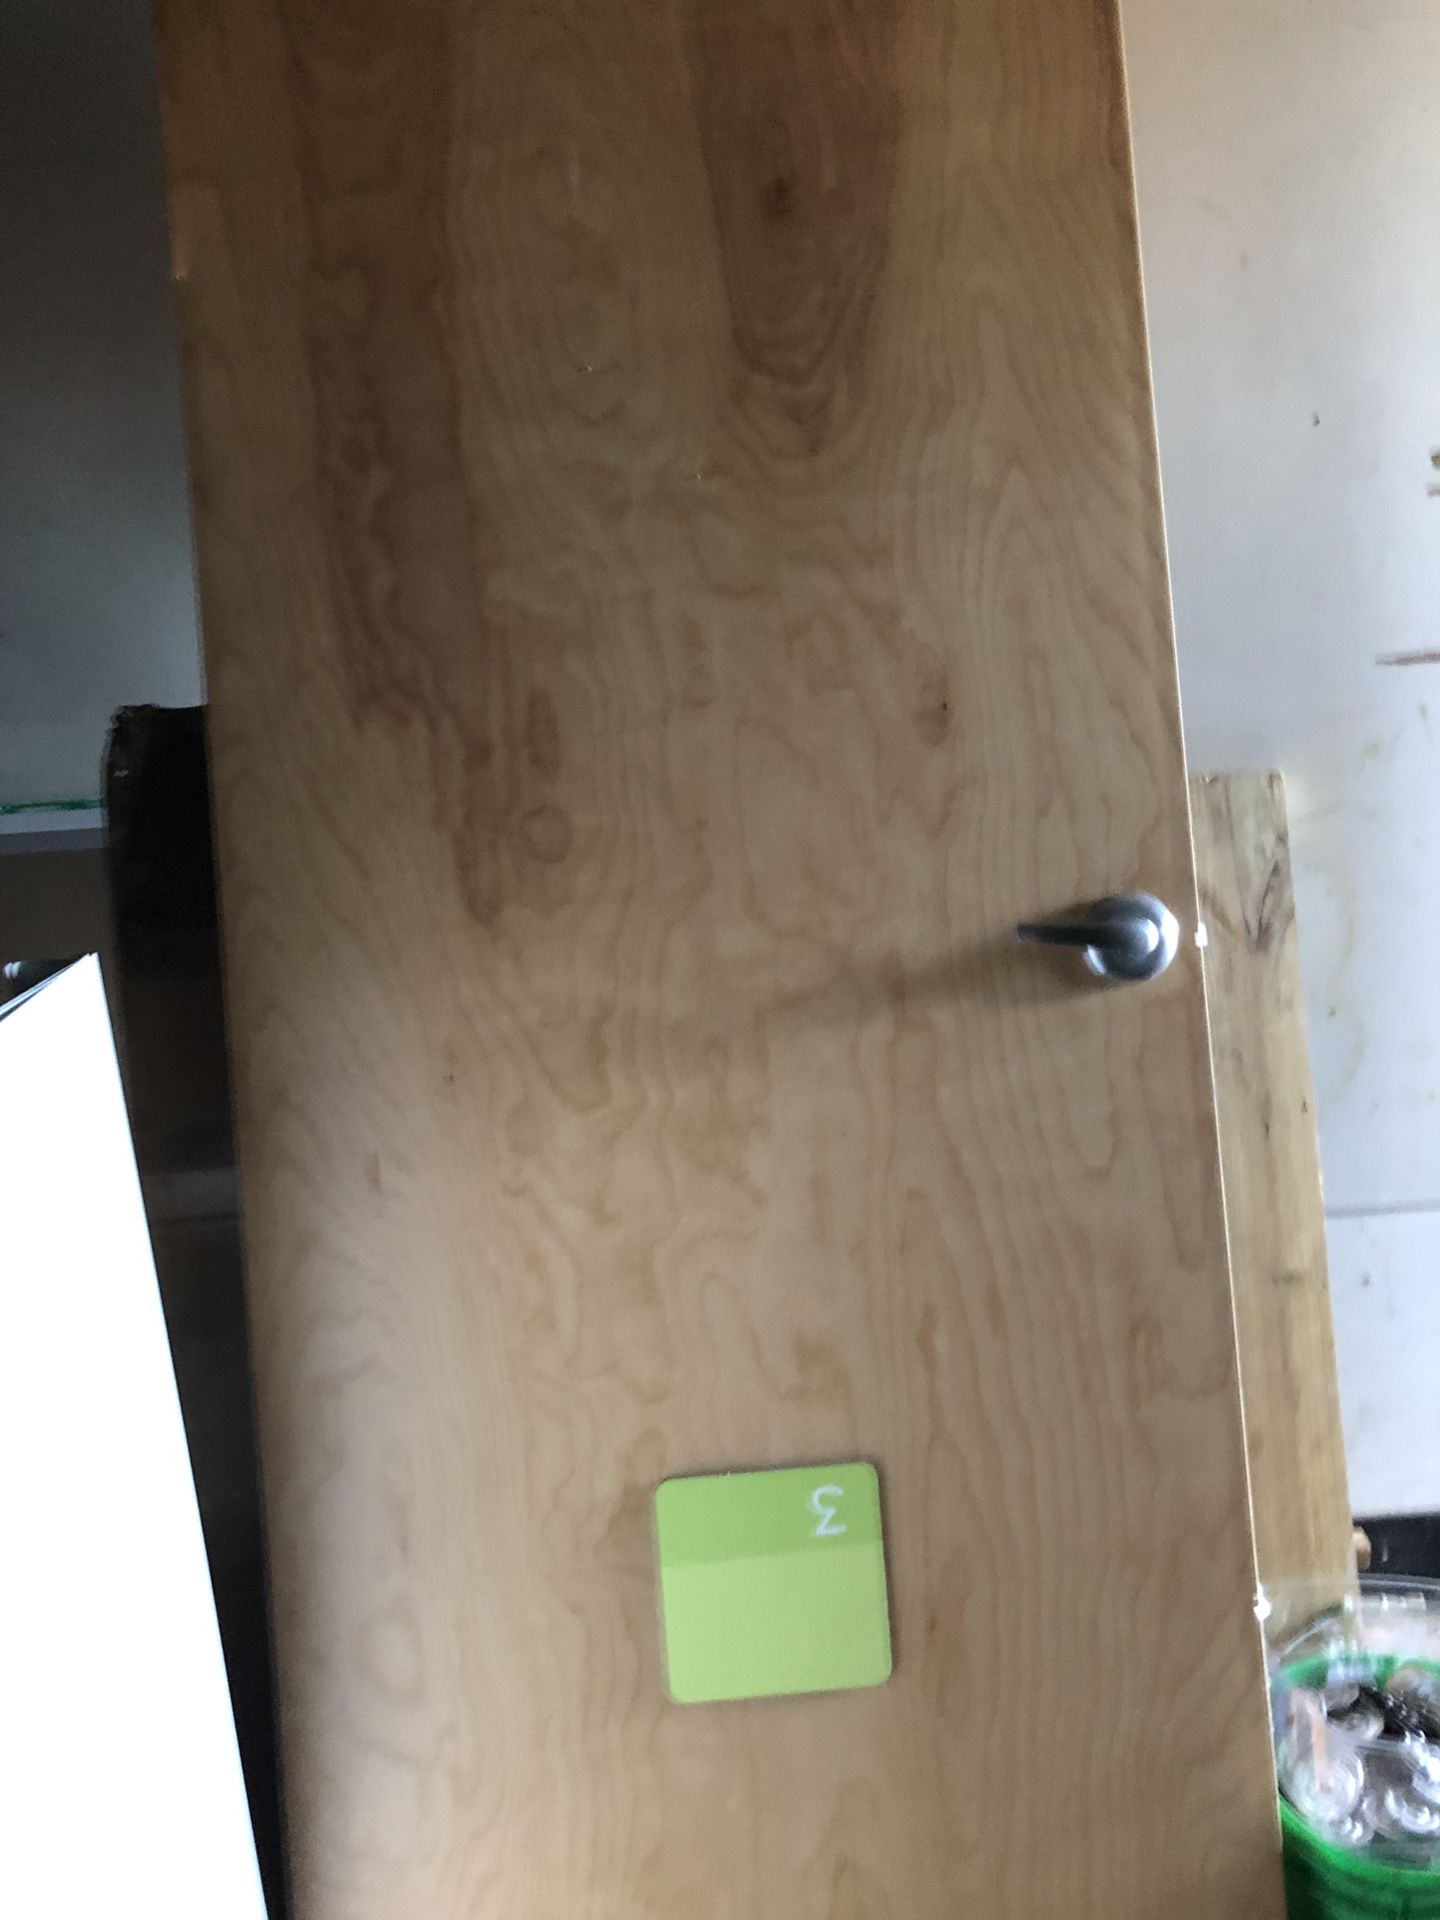 Metal and wood doors